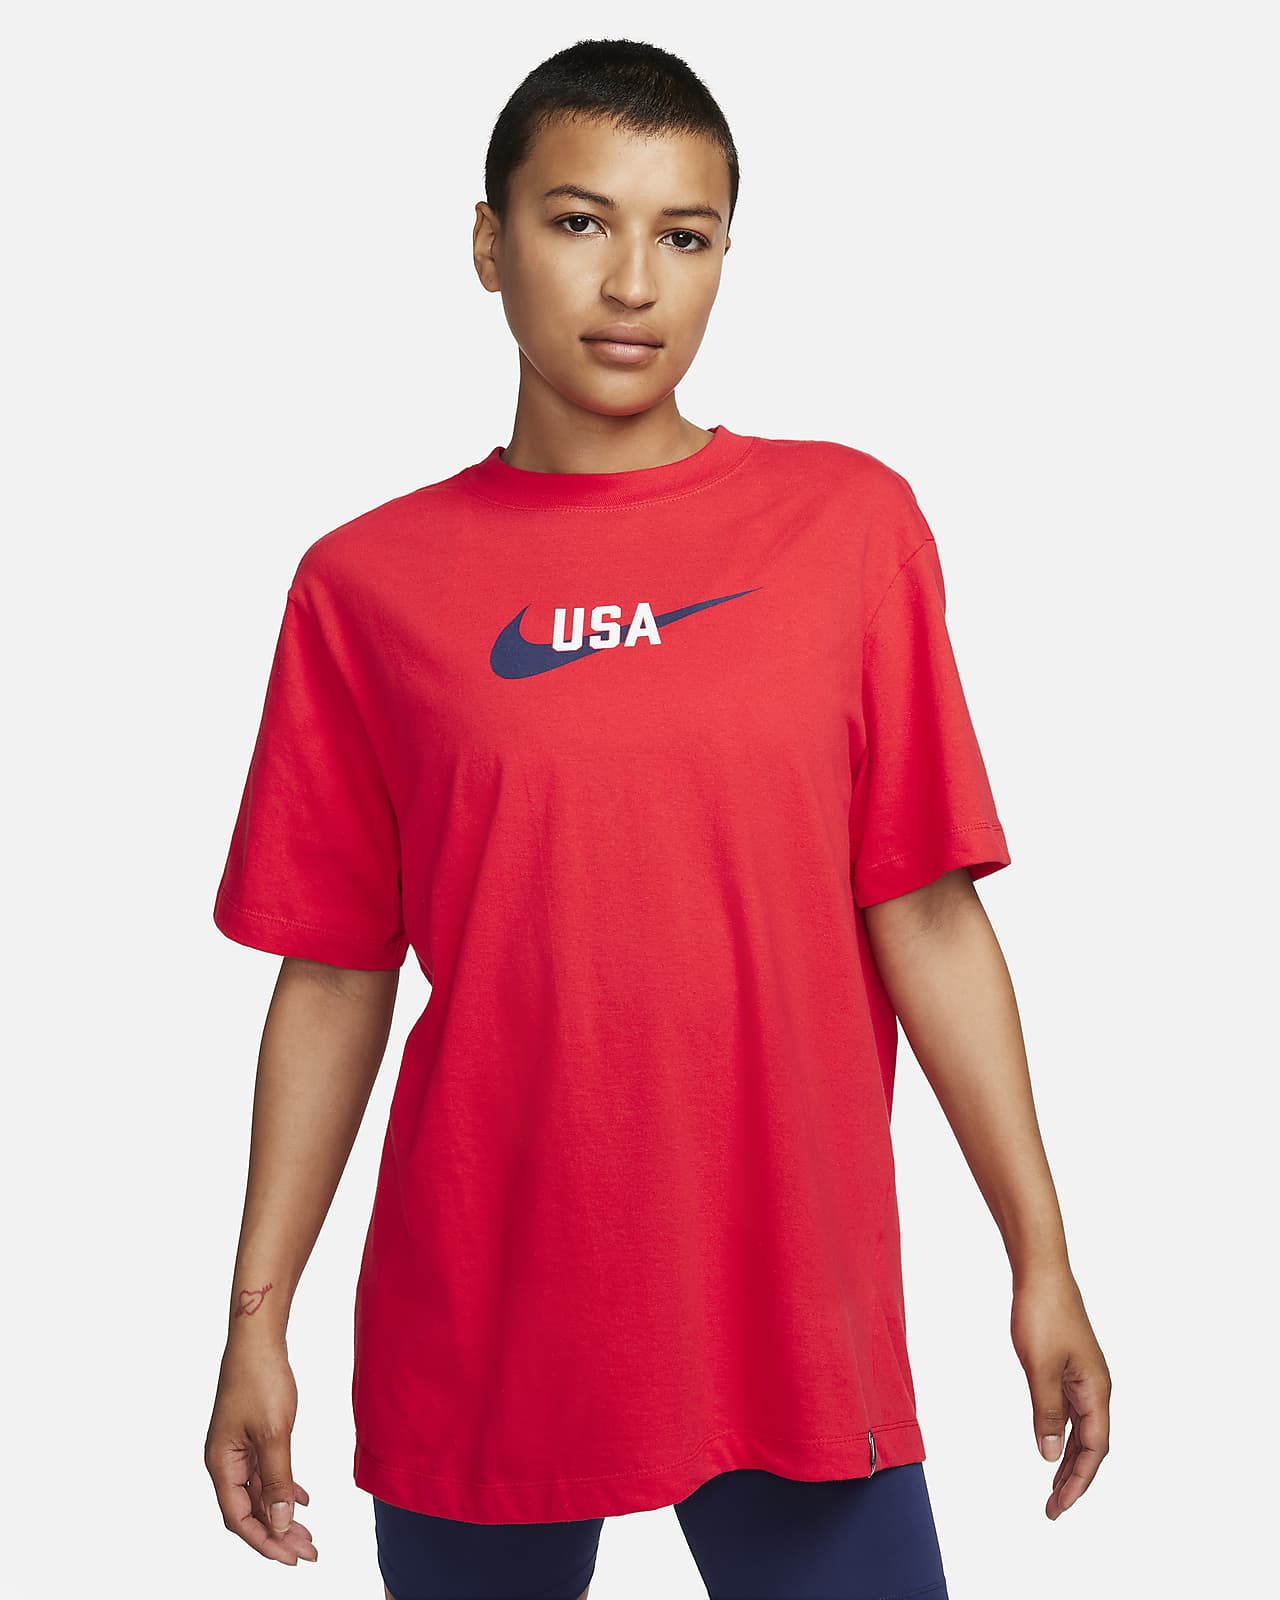 Womens Nike Swoosh Clothing.